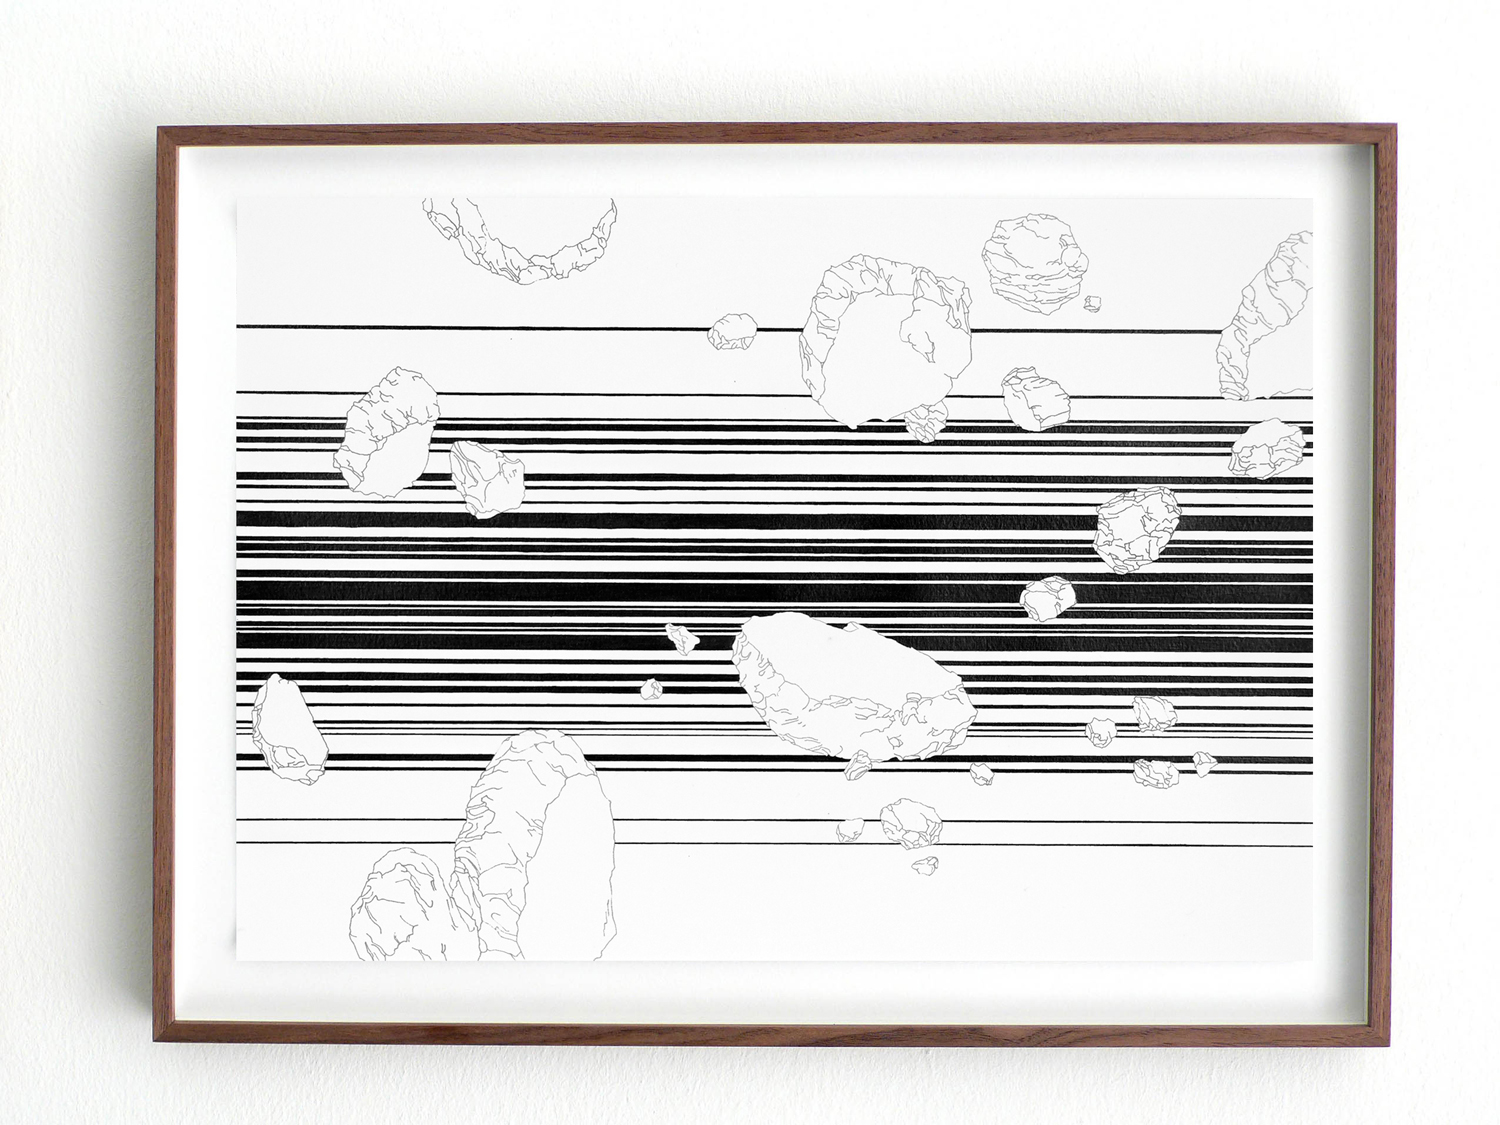   Vision/ quaalude, 2008, pencil on paper, 29,7 x 42cm  